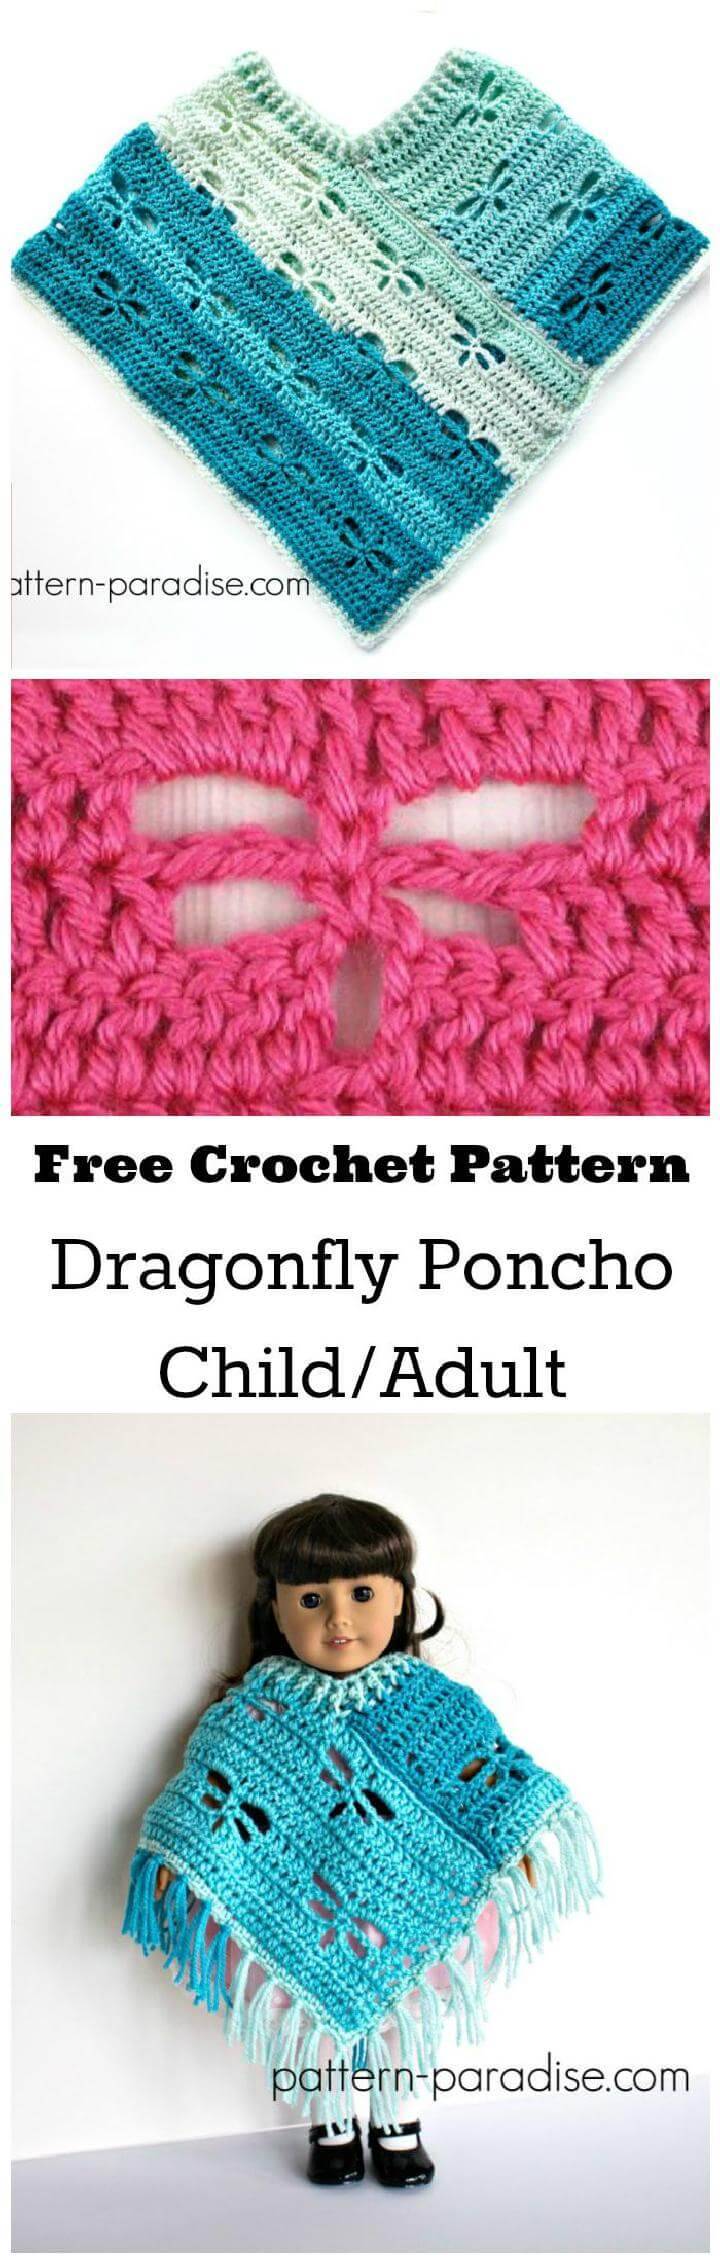 Free Crochet Pattern - Dragonfly Poncho Child-Adult